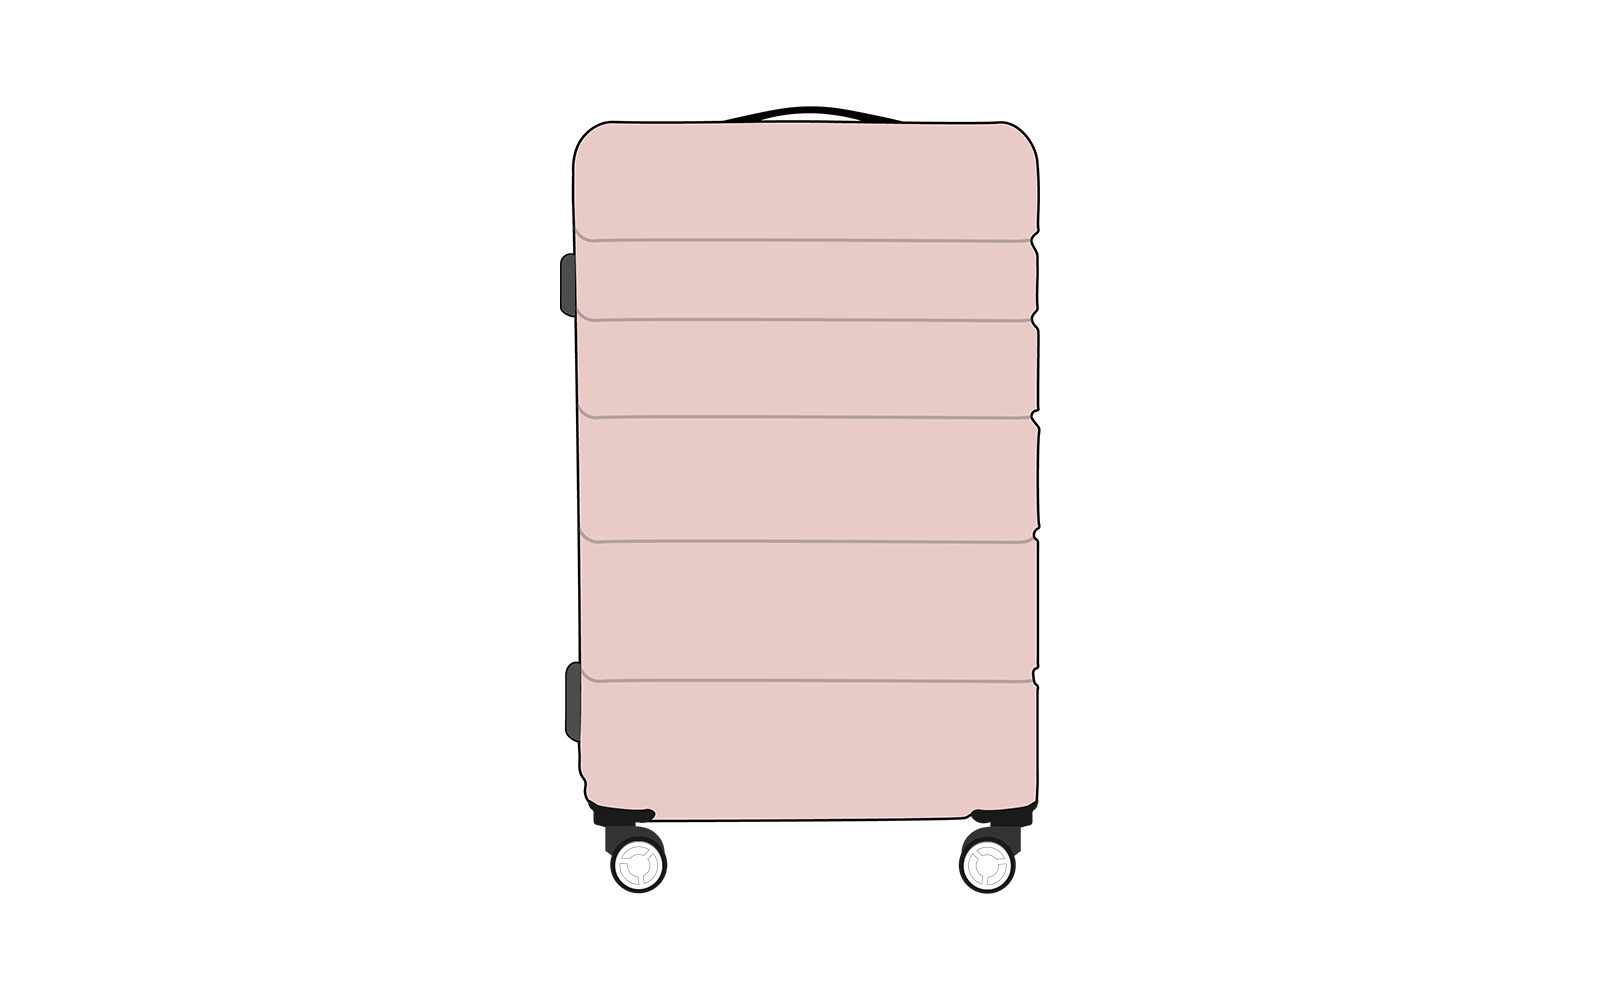 Baggage Item Travel Luggage Vector